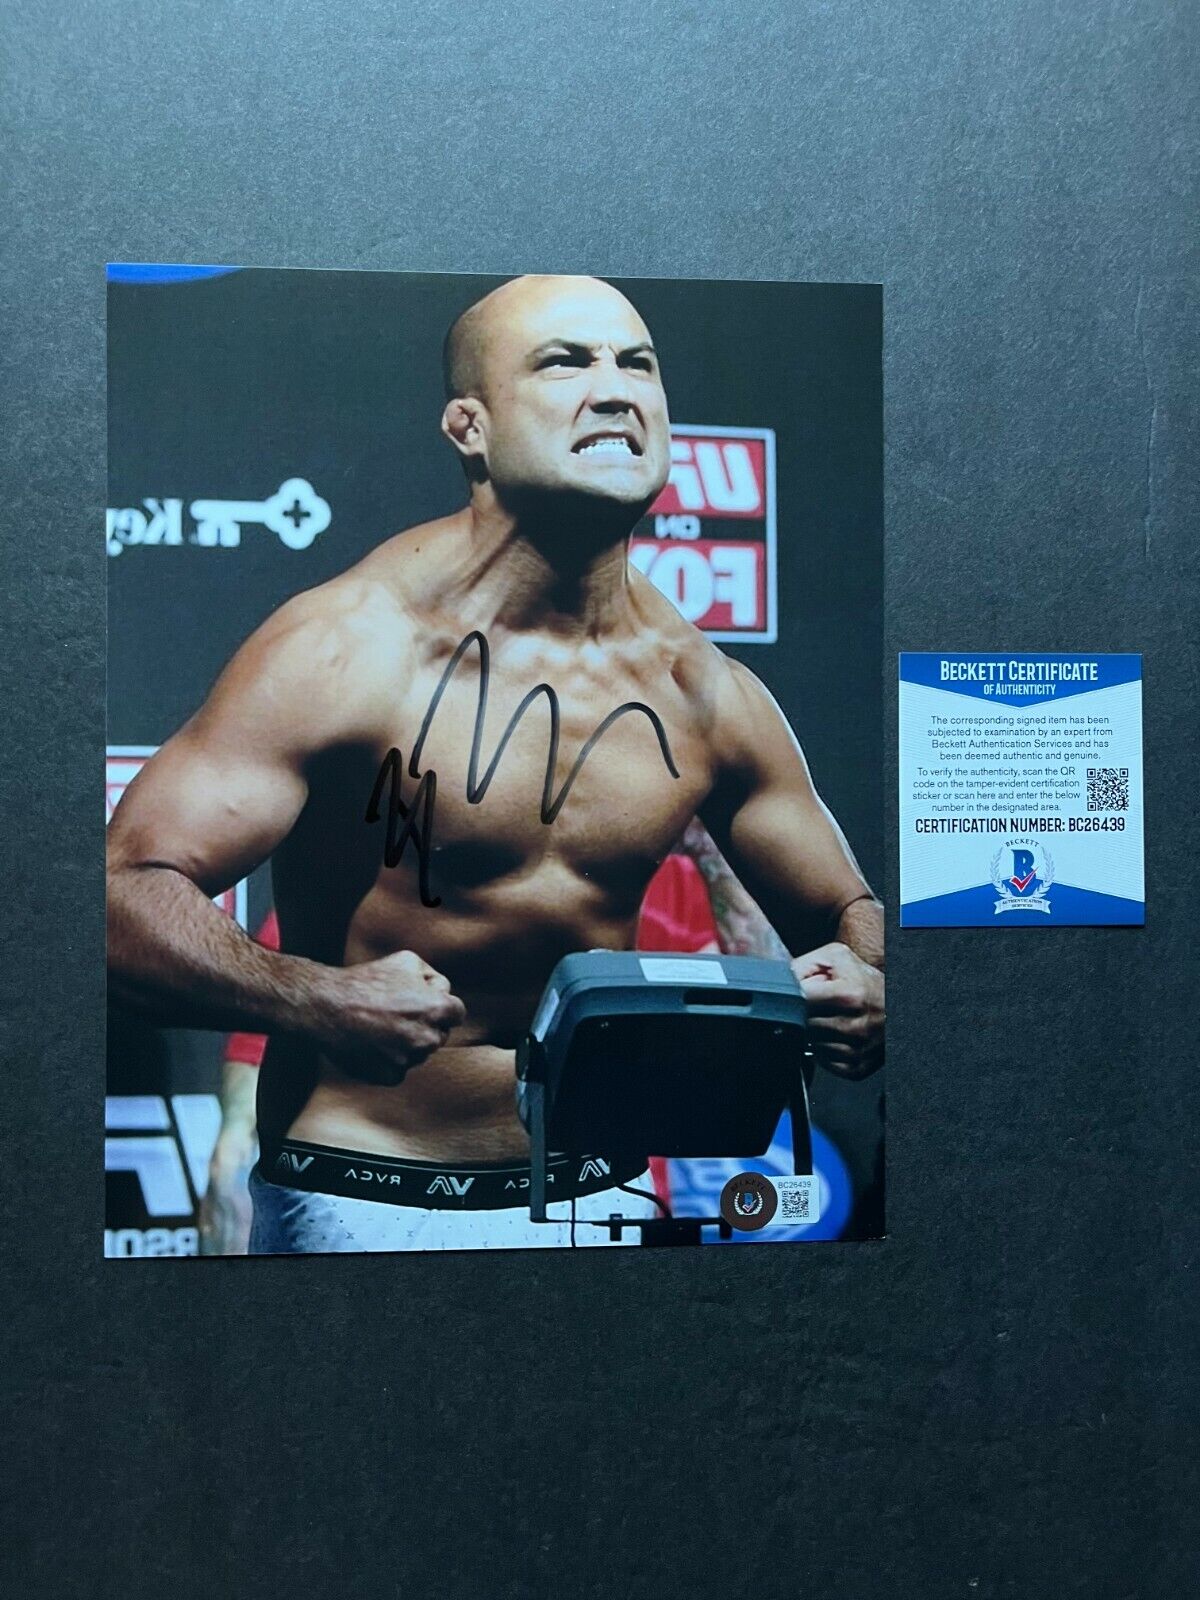 BJ Penn Hot! signed autographed UFC MMA legend 8x10 Photo Poster painting Beckett BAS coa